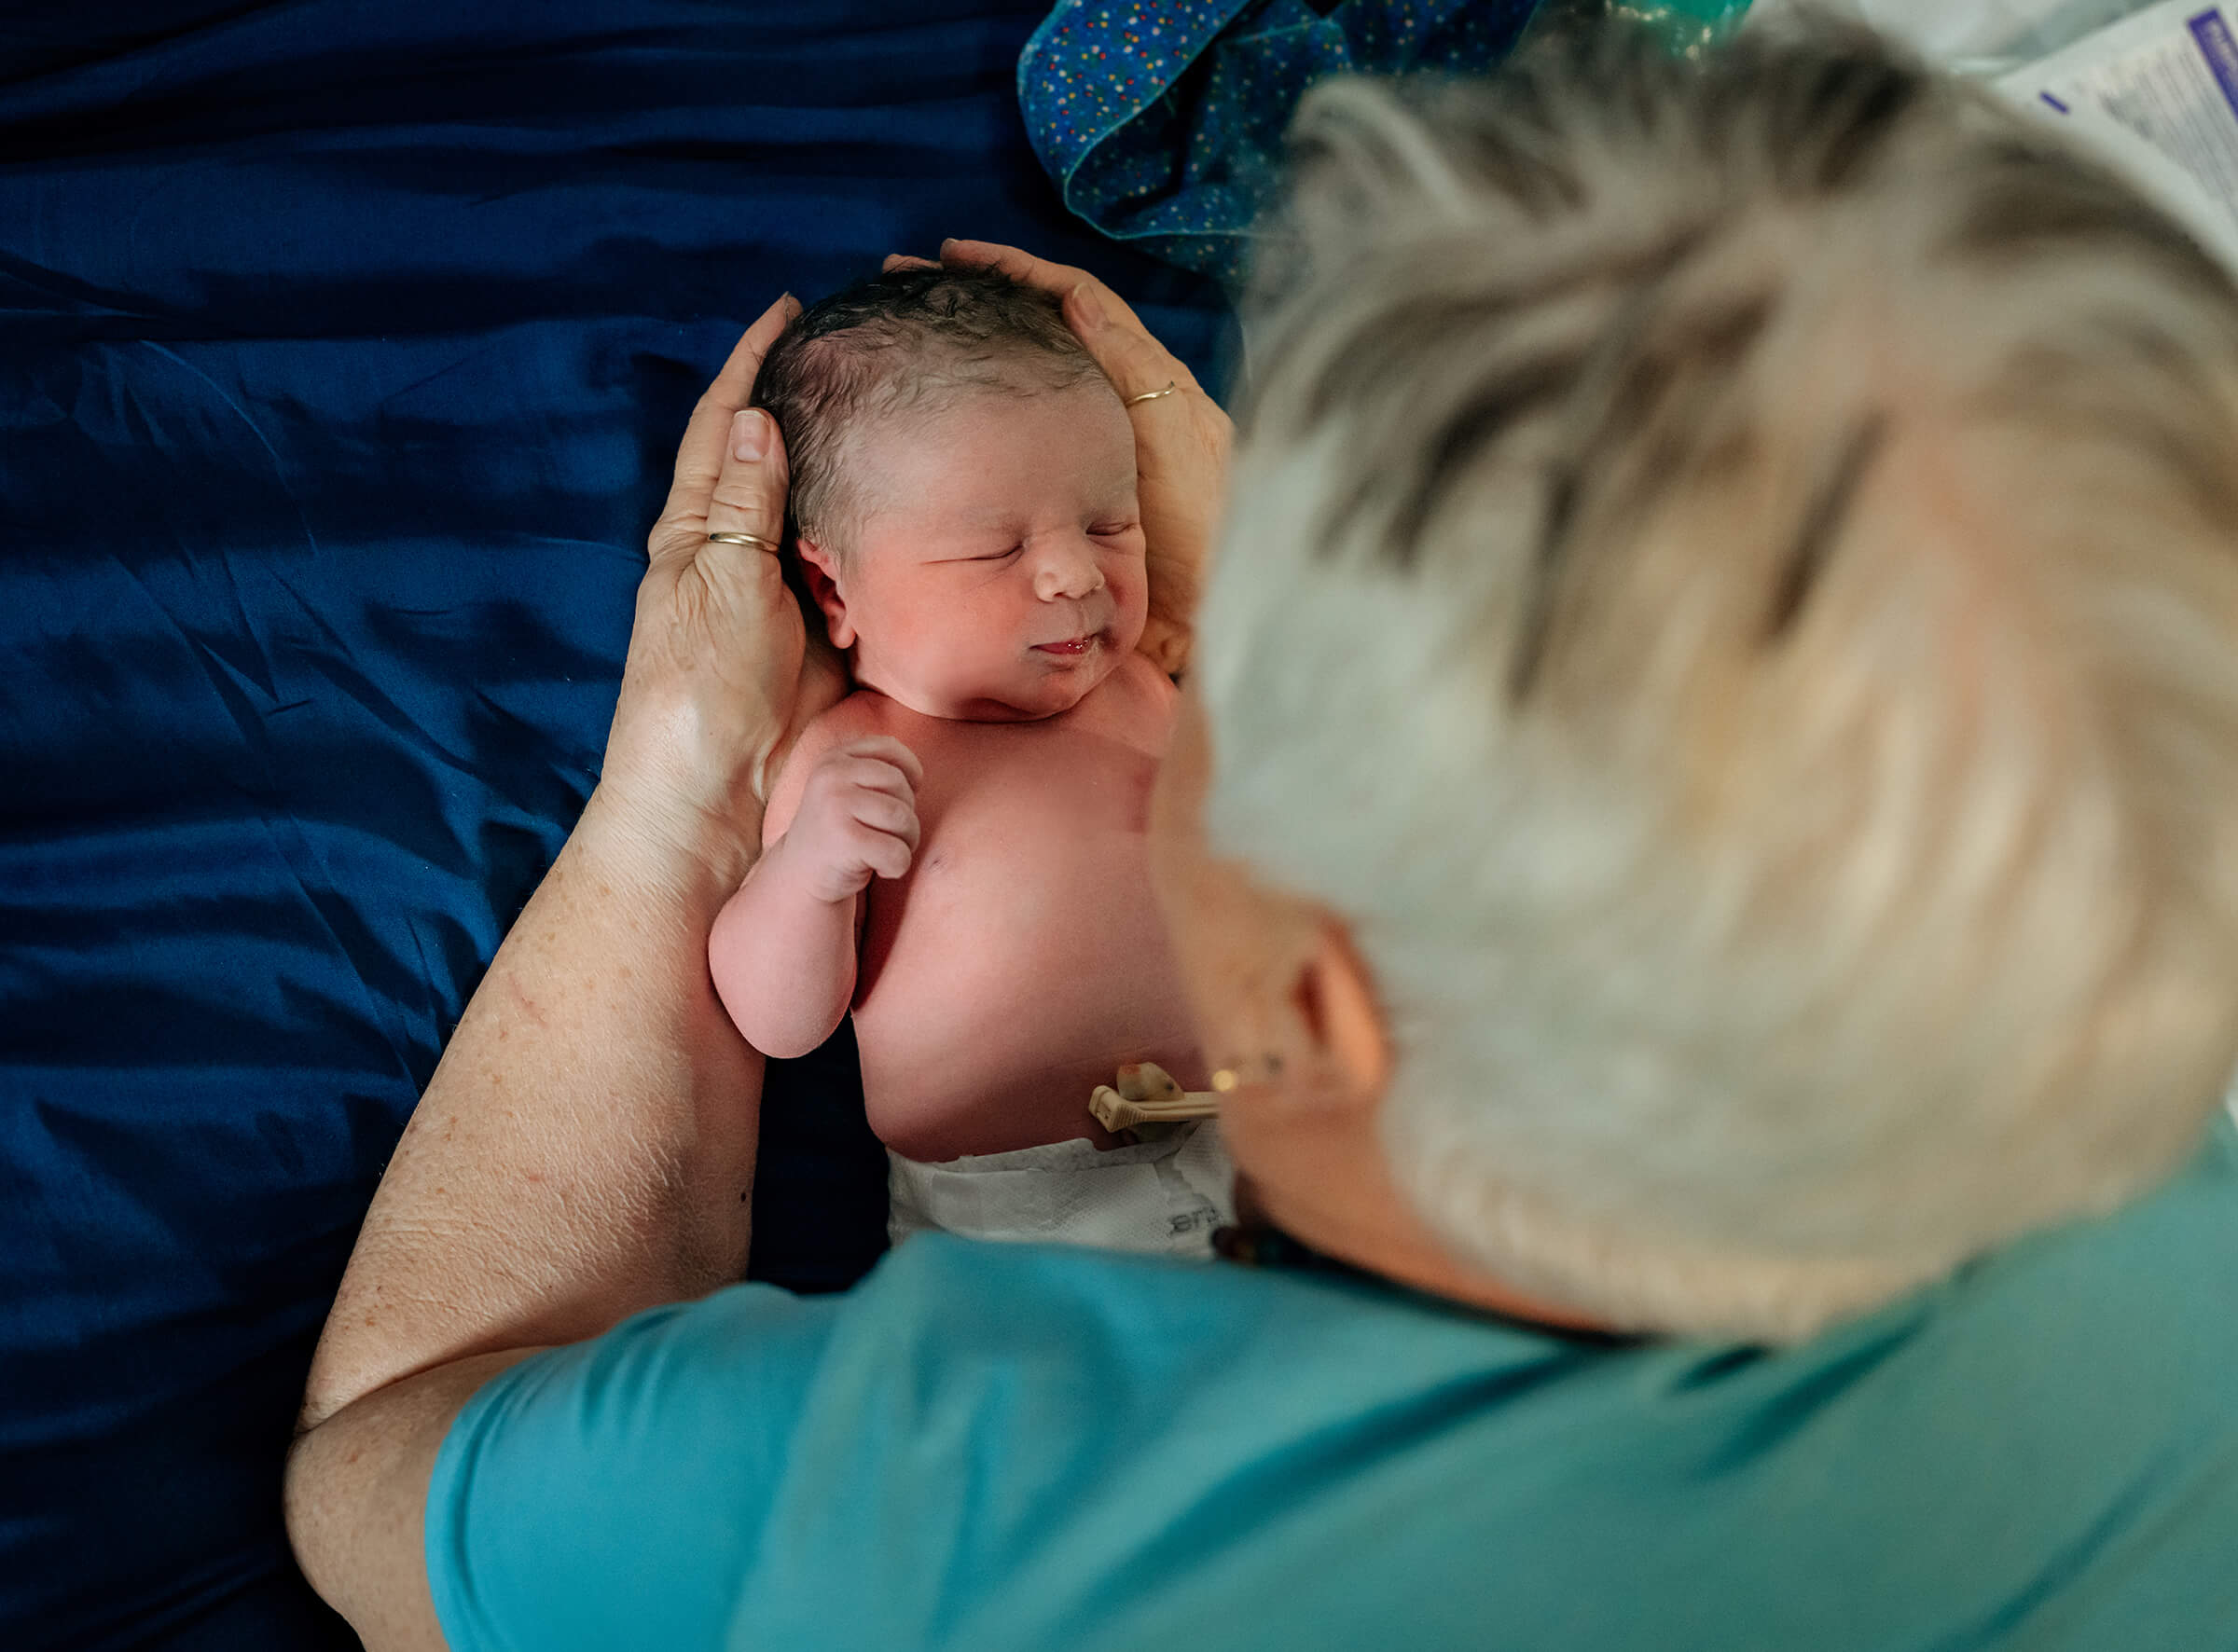 Dixie Story a Las Vegas midwife performing a newborn exam